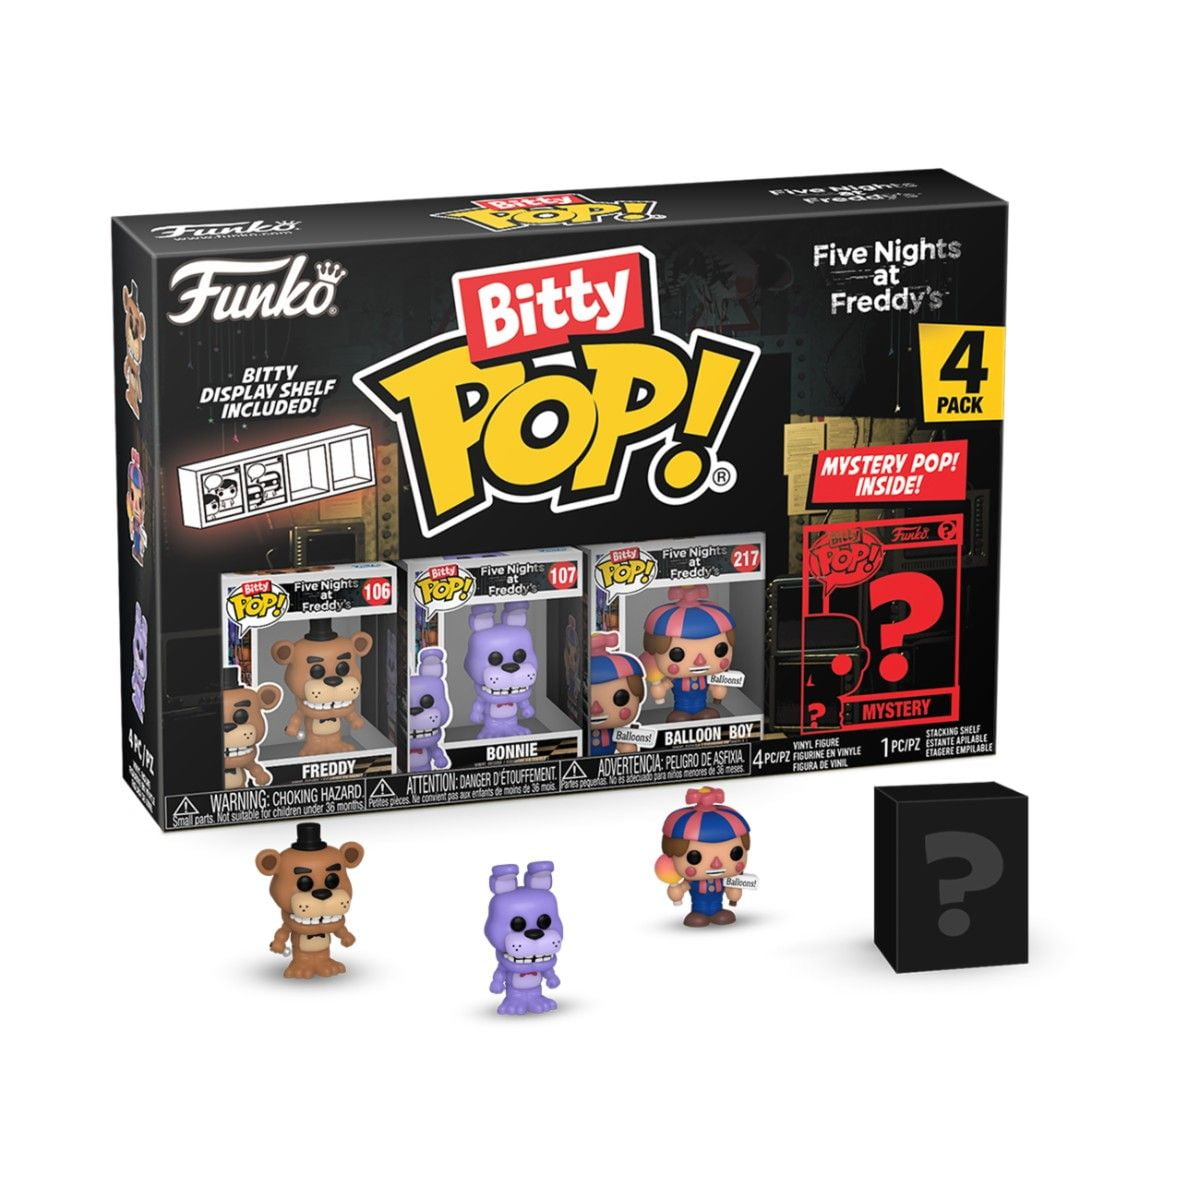 Freddy - Five Nights at Freddy's - Funko Bitty POP! (4 Pack)